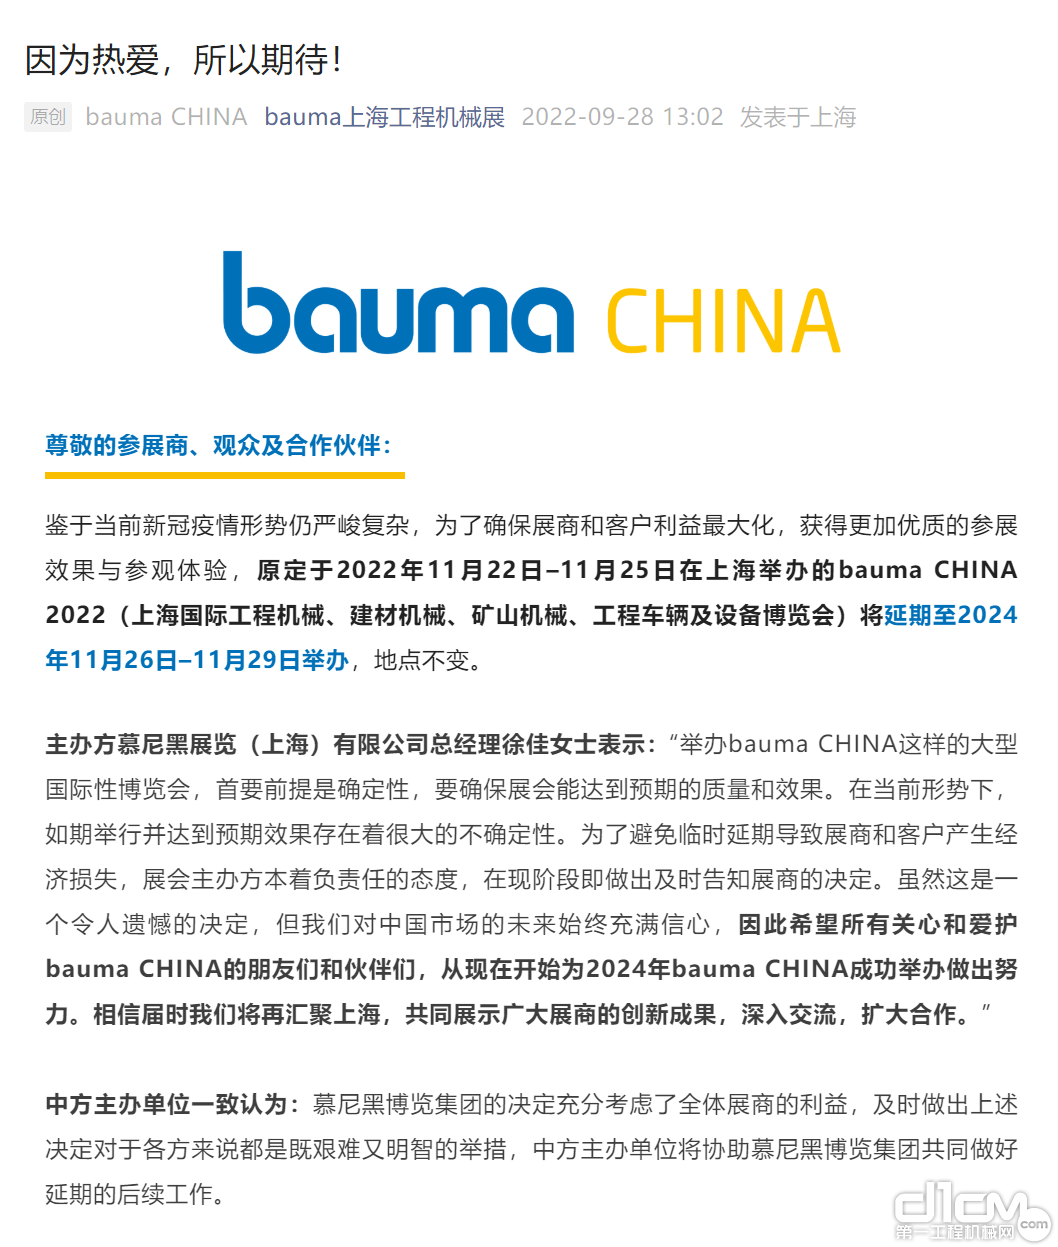 bauma CHINA 2022官网截图